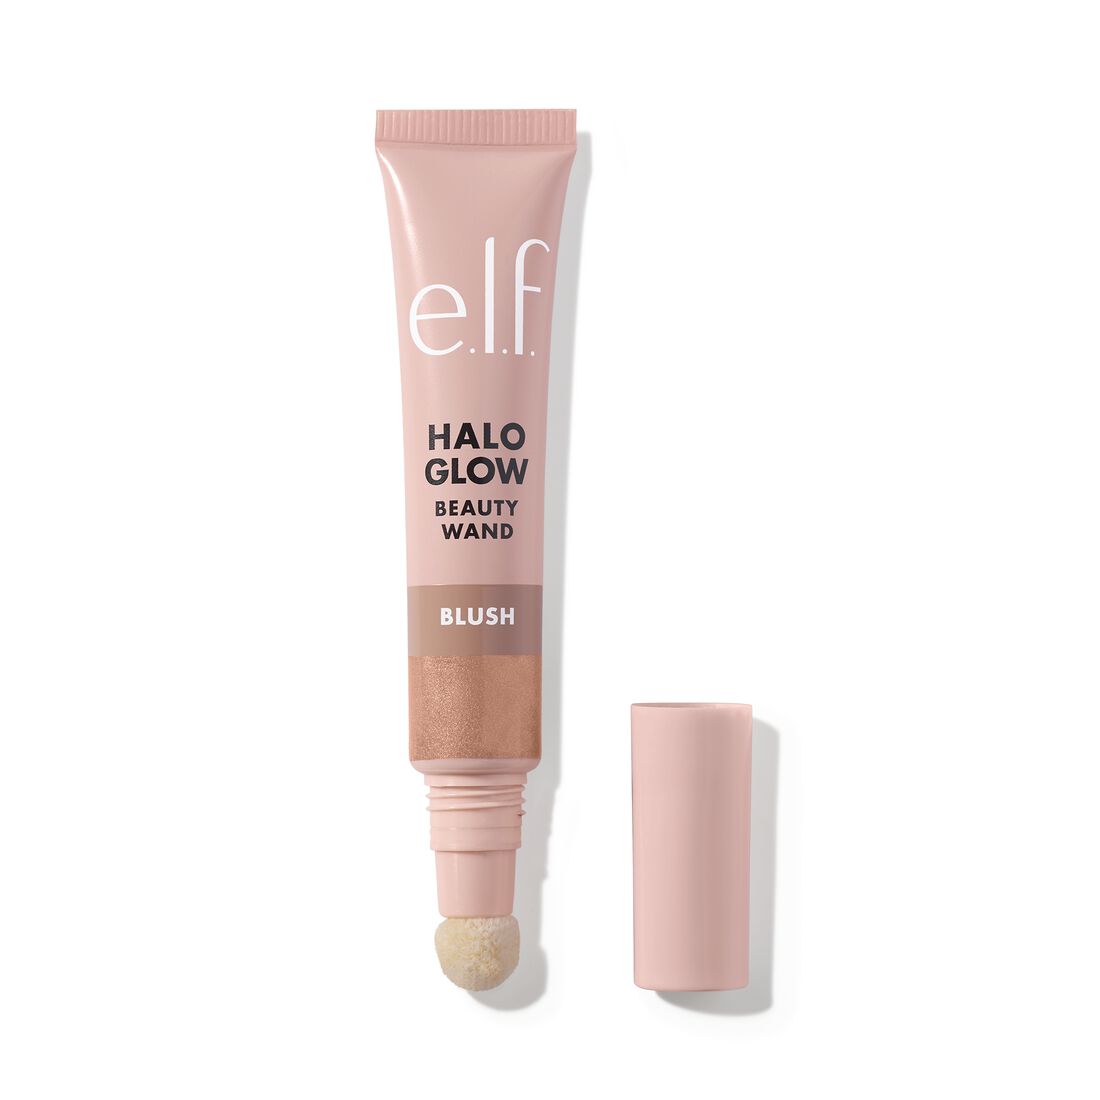 e.l.f. Halo Glow Blush Beauty Wand Liquid filter Volare Makeup Candlelit - Light Peach for Fair/Medium  